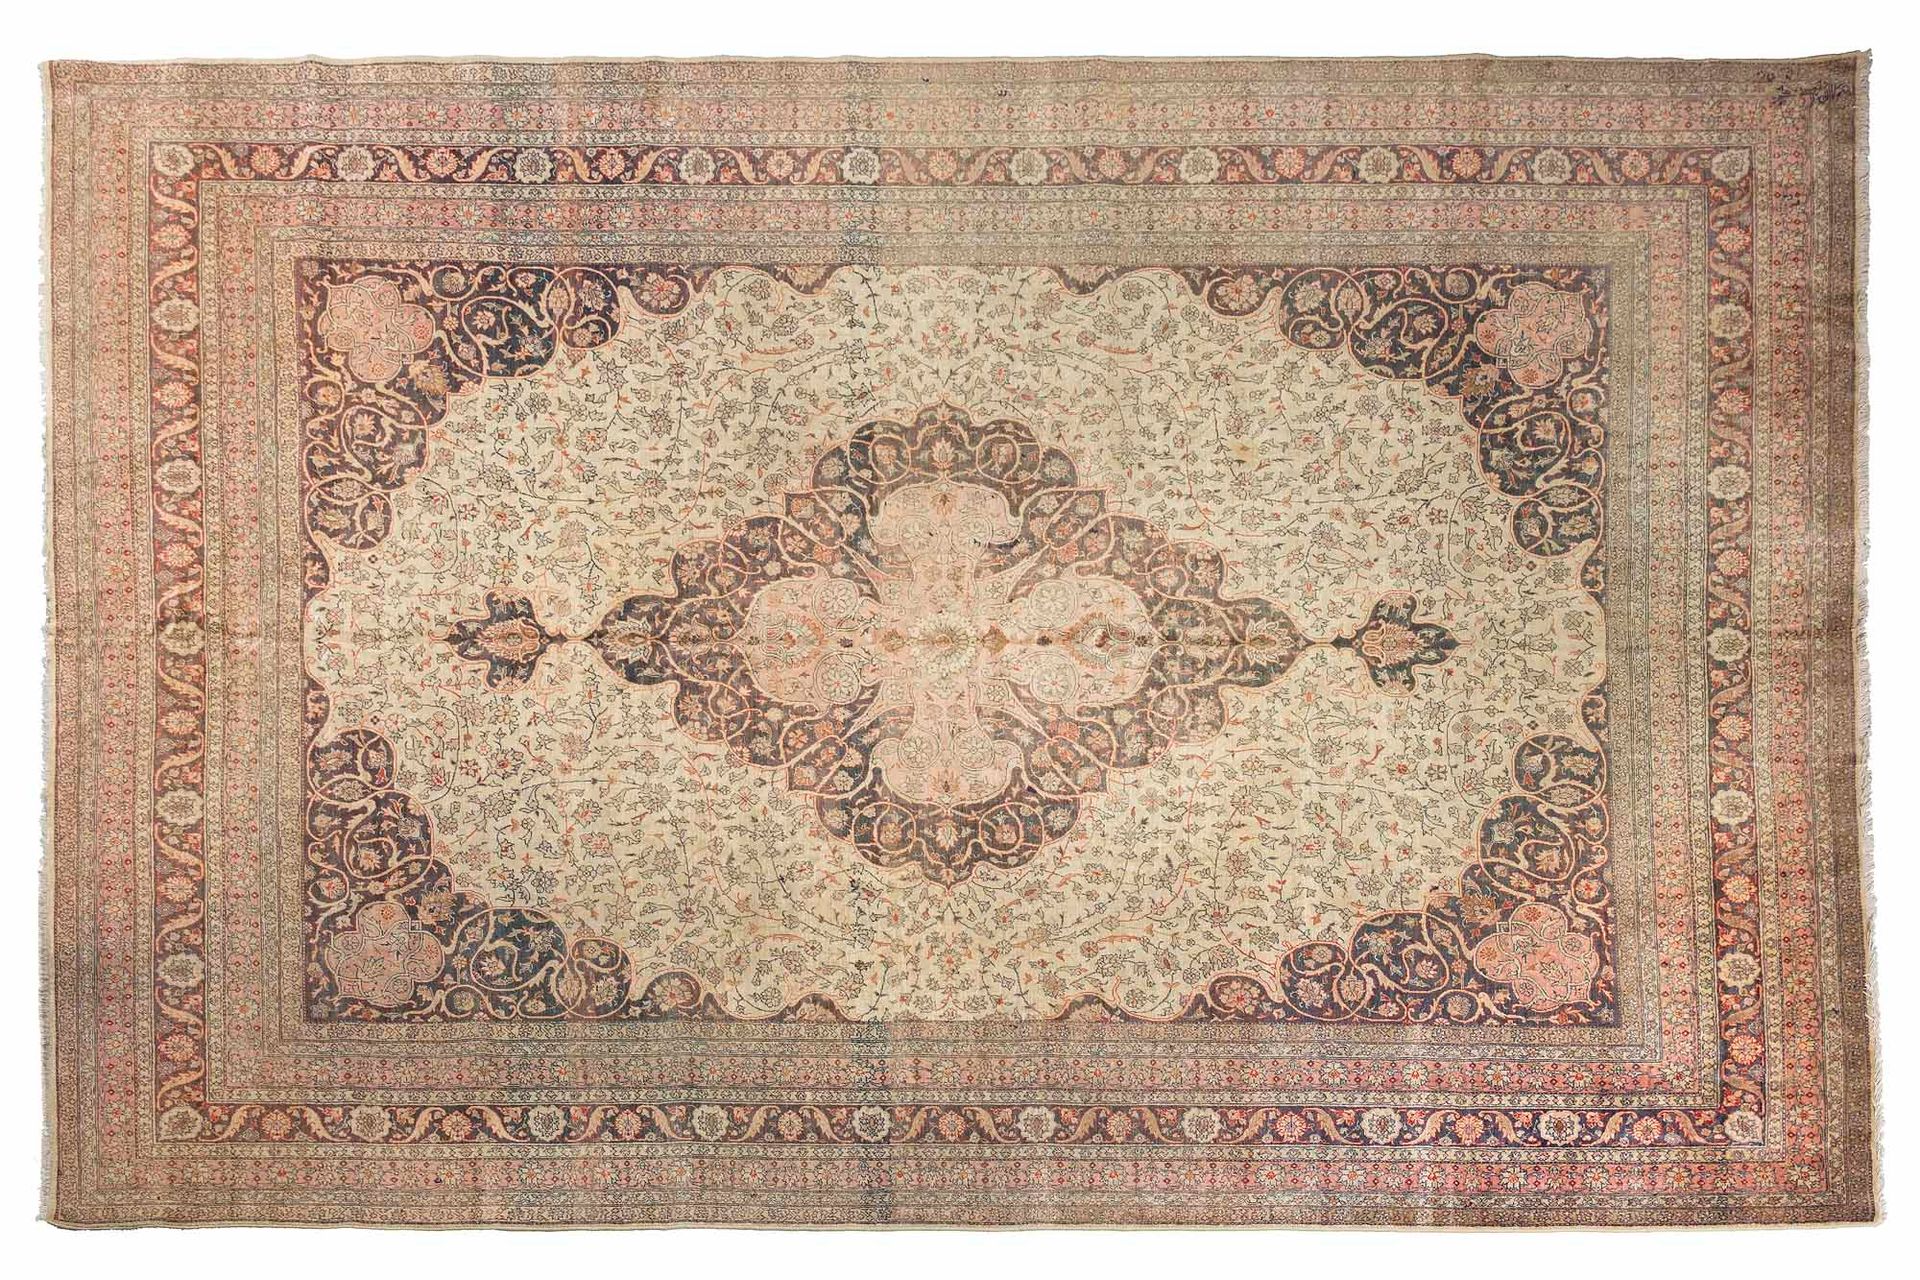 Null SIVAS - SEBASTIA (Asia Minor) carpet, early 20th century

Dimensions : 380 &hellip;